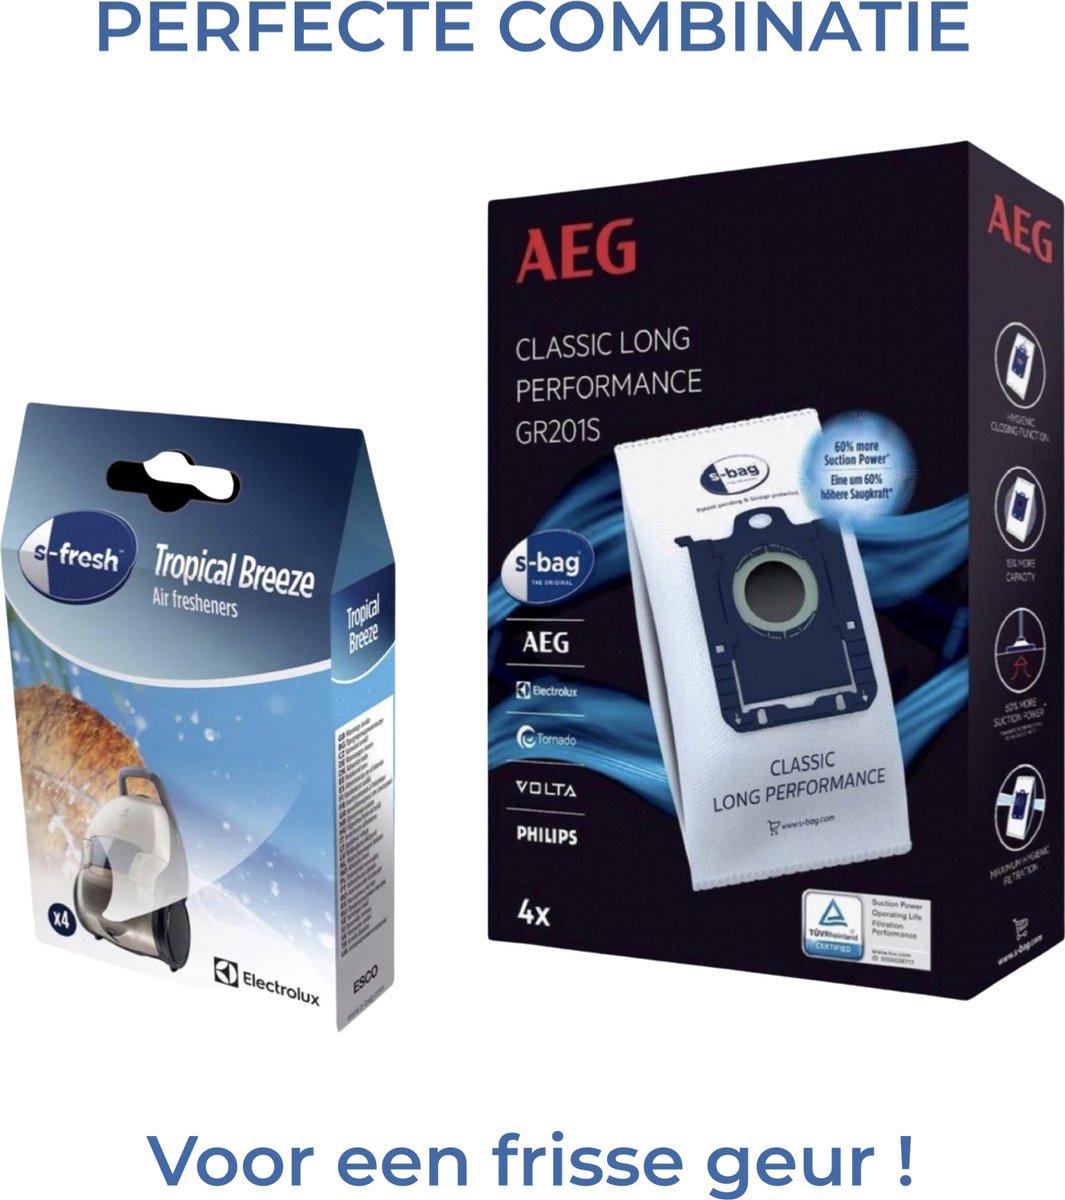 AEG - S-BAG stofzuigerzakken + S-FRESH Geurkorrels (tropical breeze) - Air fresheners - Geurparels - Voor Stofzuigers - COMBIDEAL